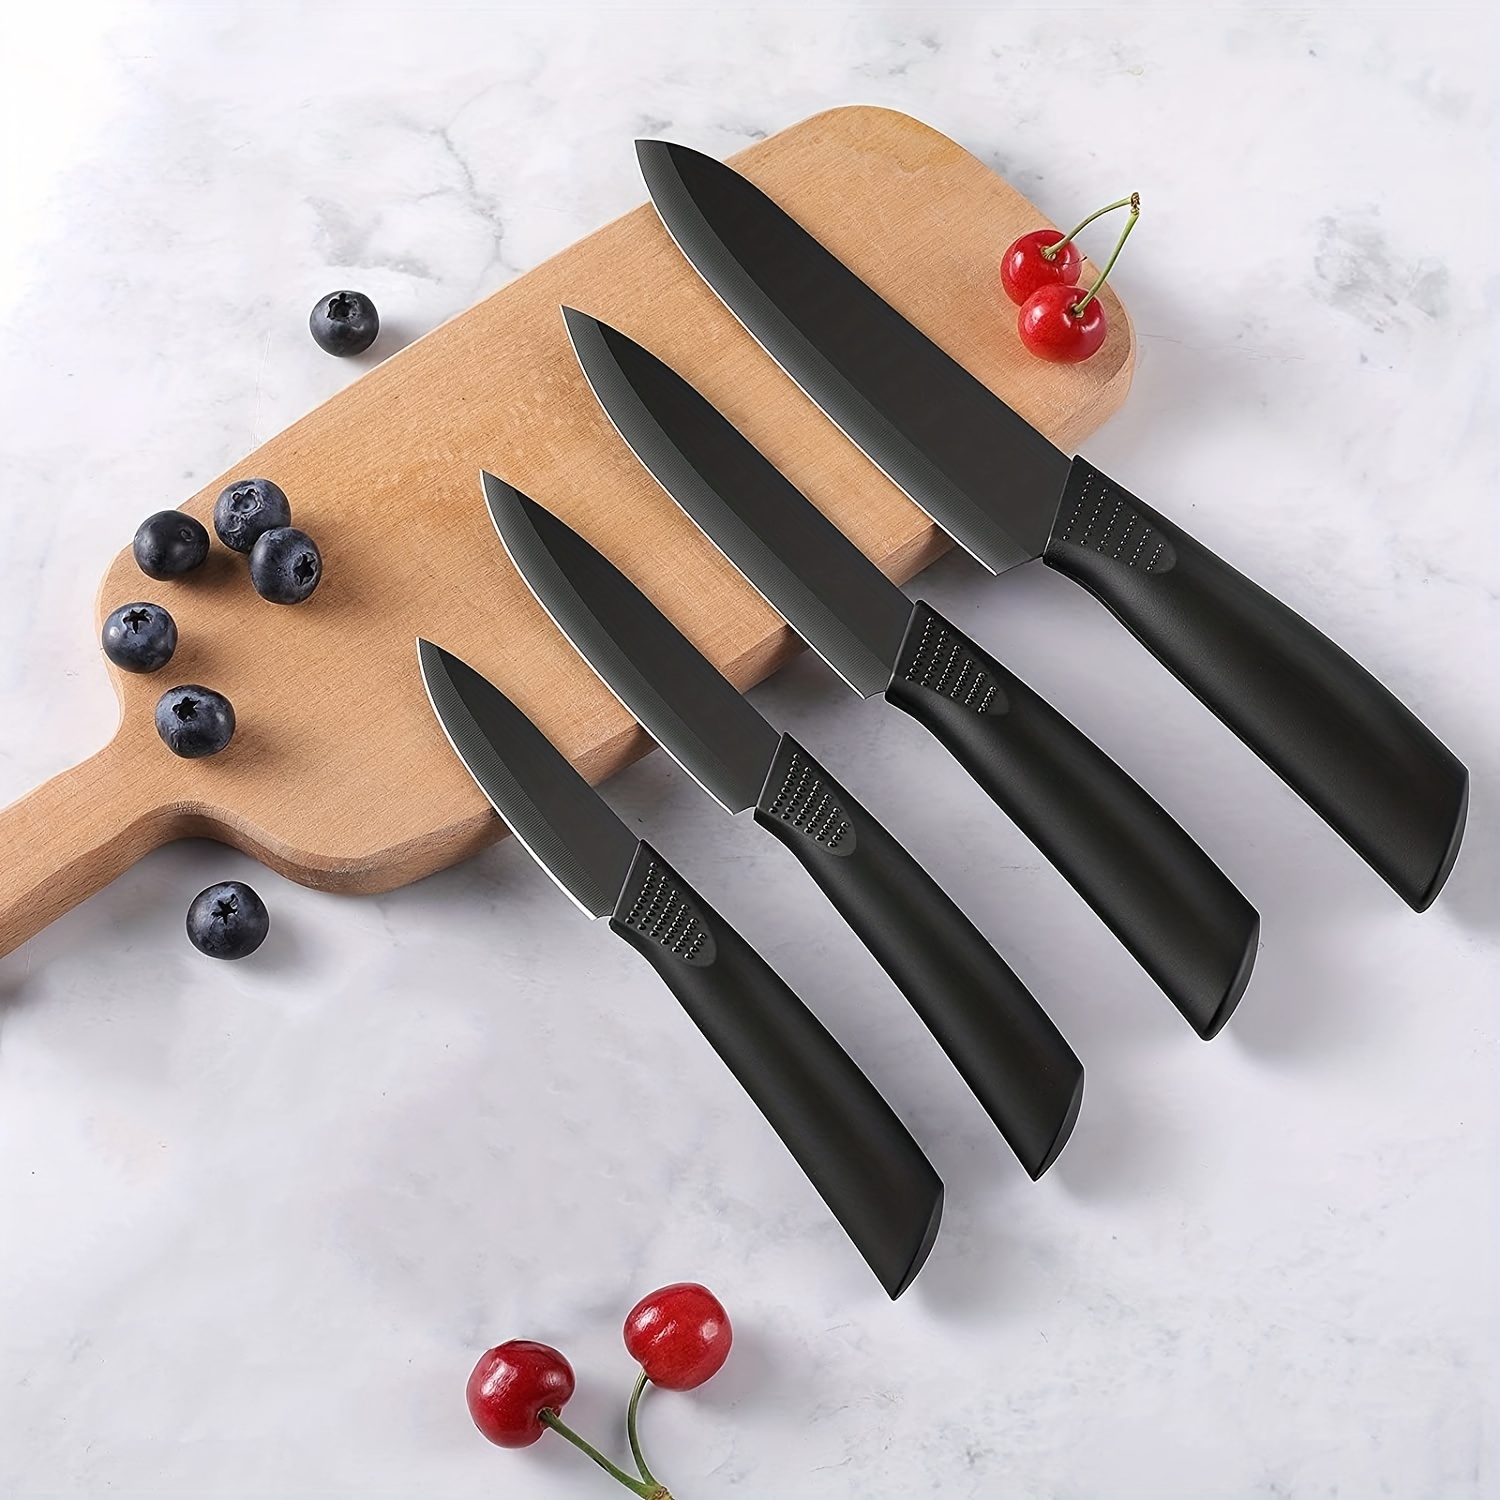 5pcs kitchen fruit paring knife black